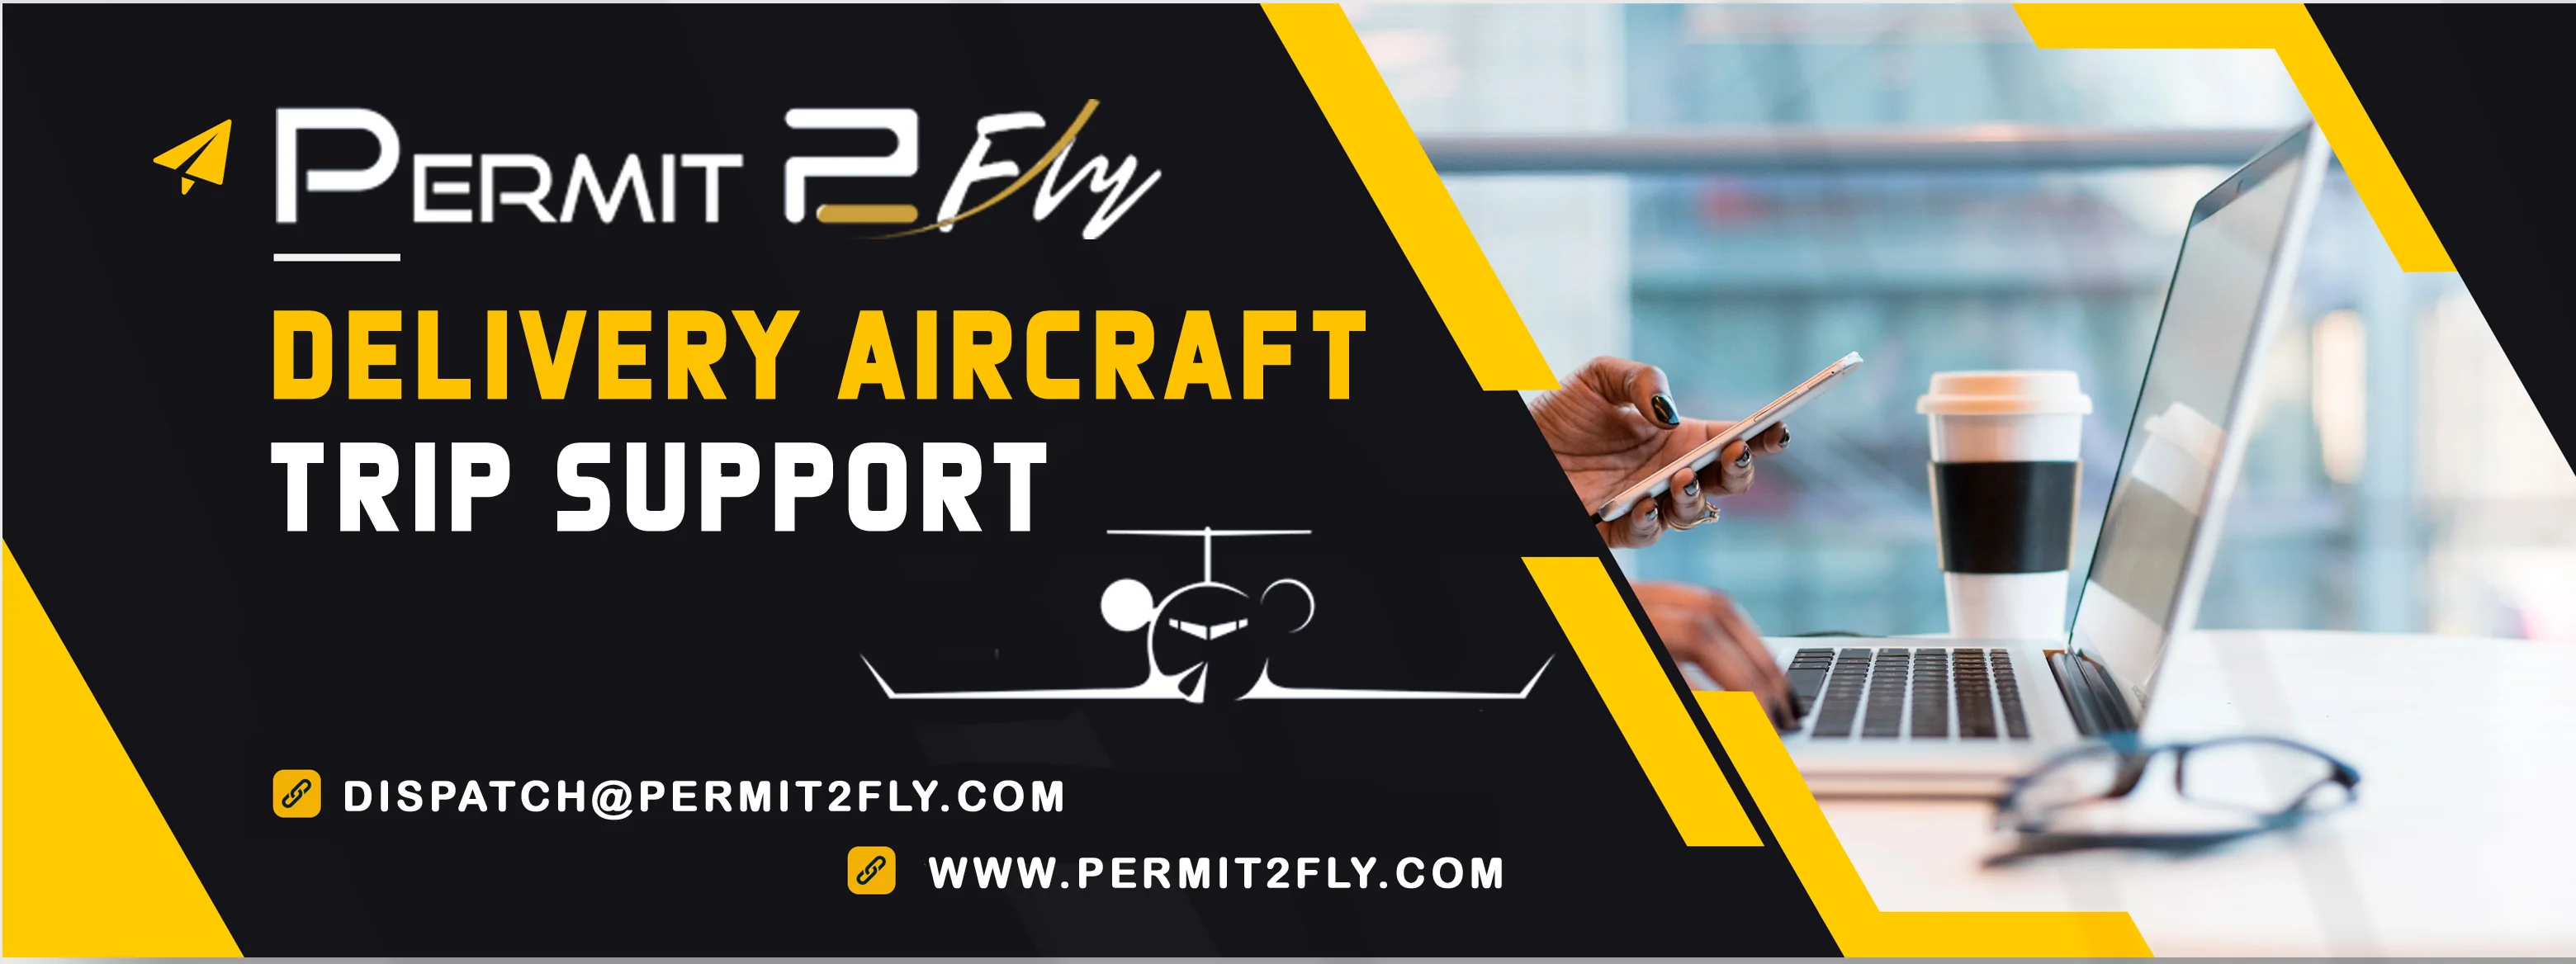 permit2fly